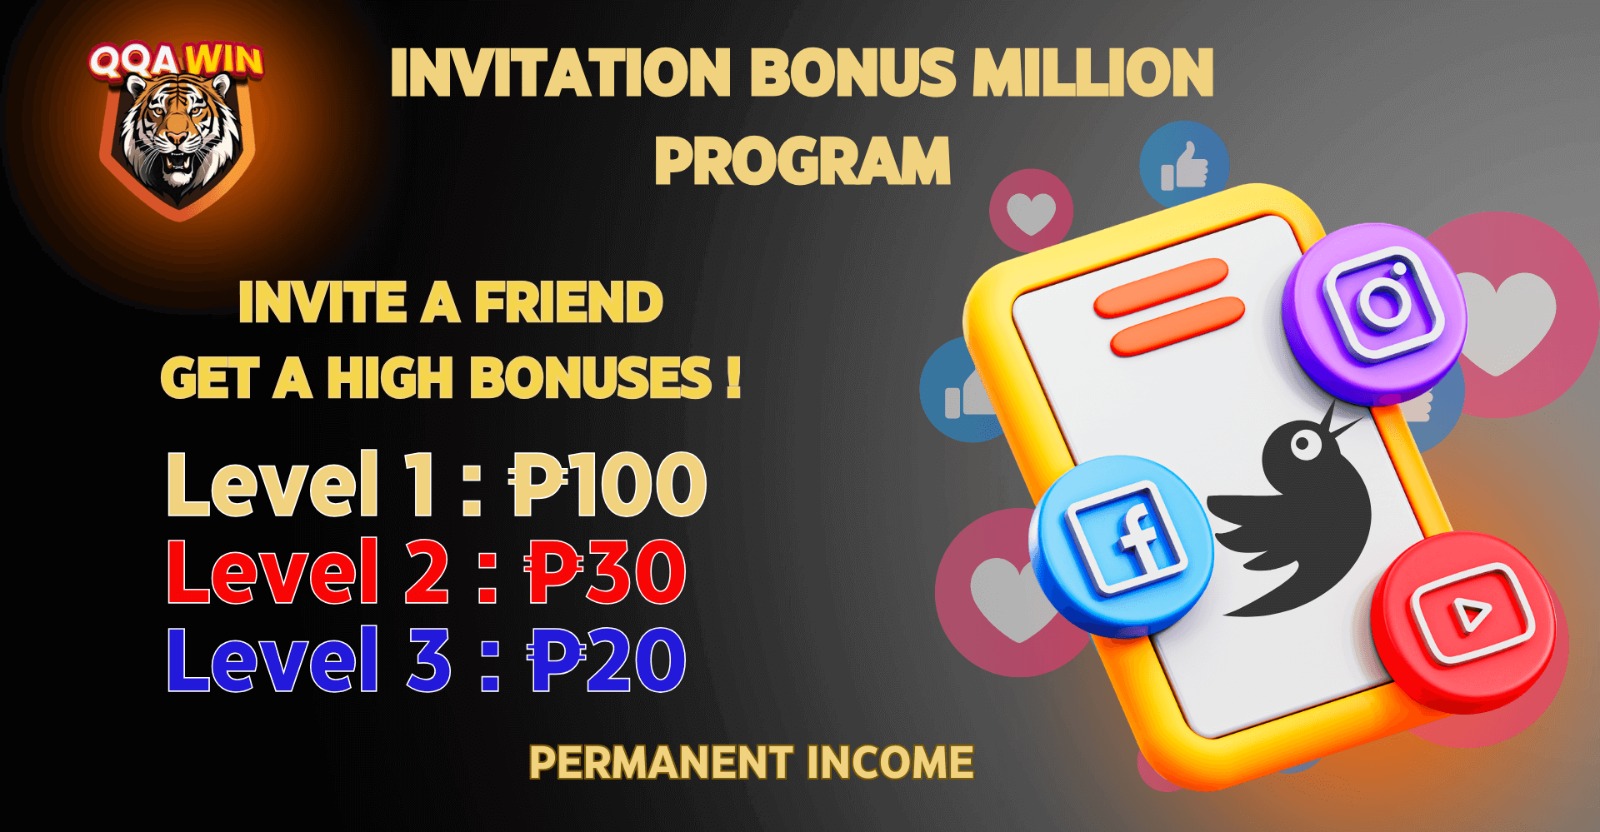 Invitation bonus QQAWIN